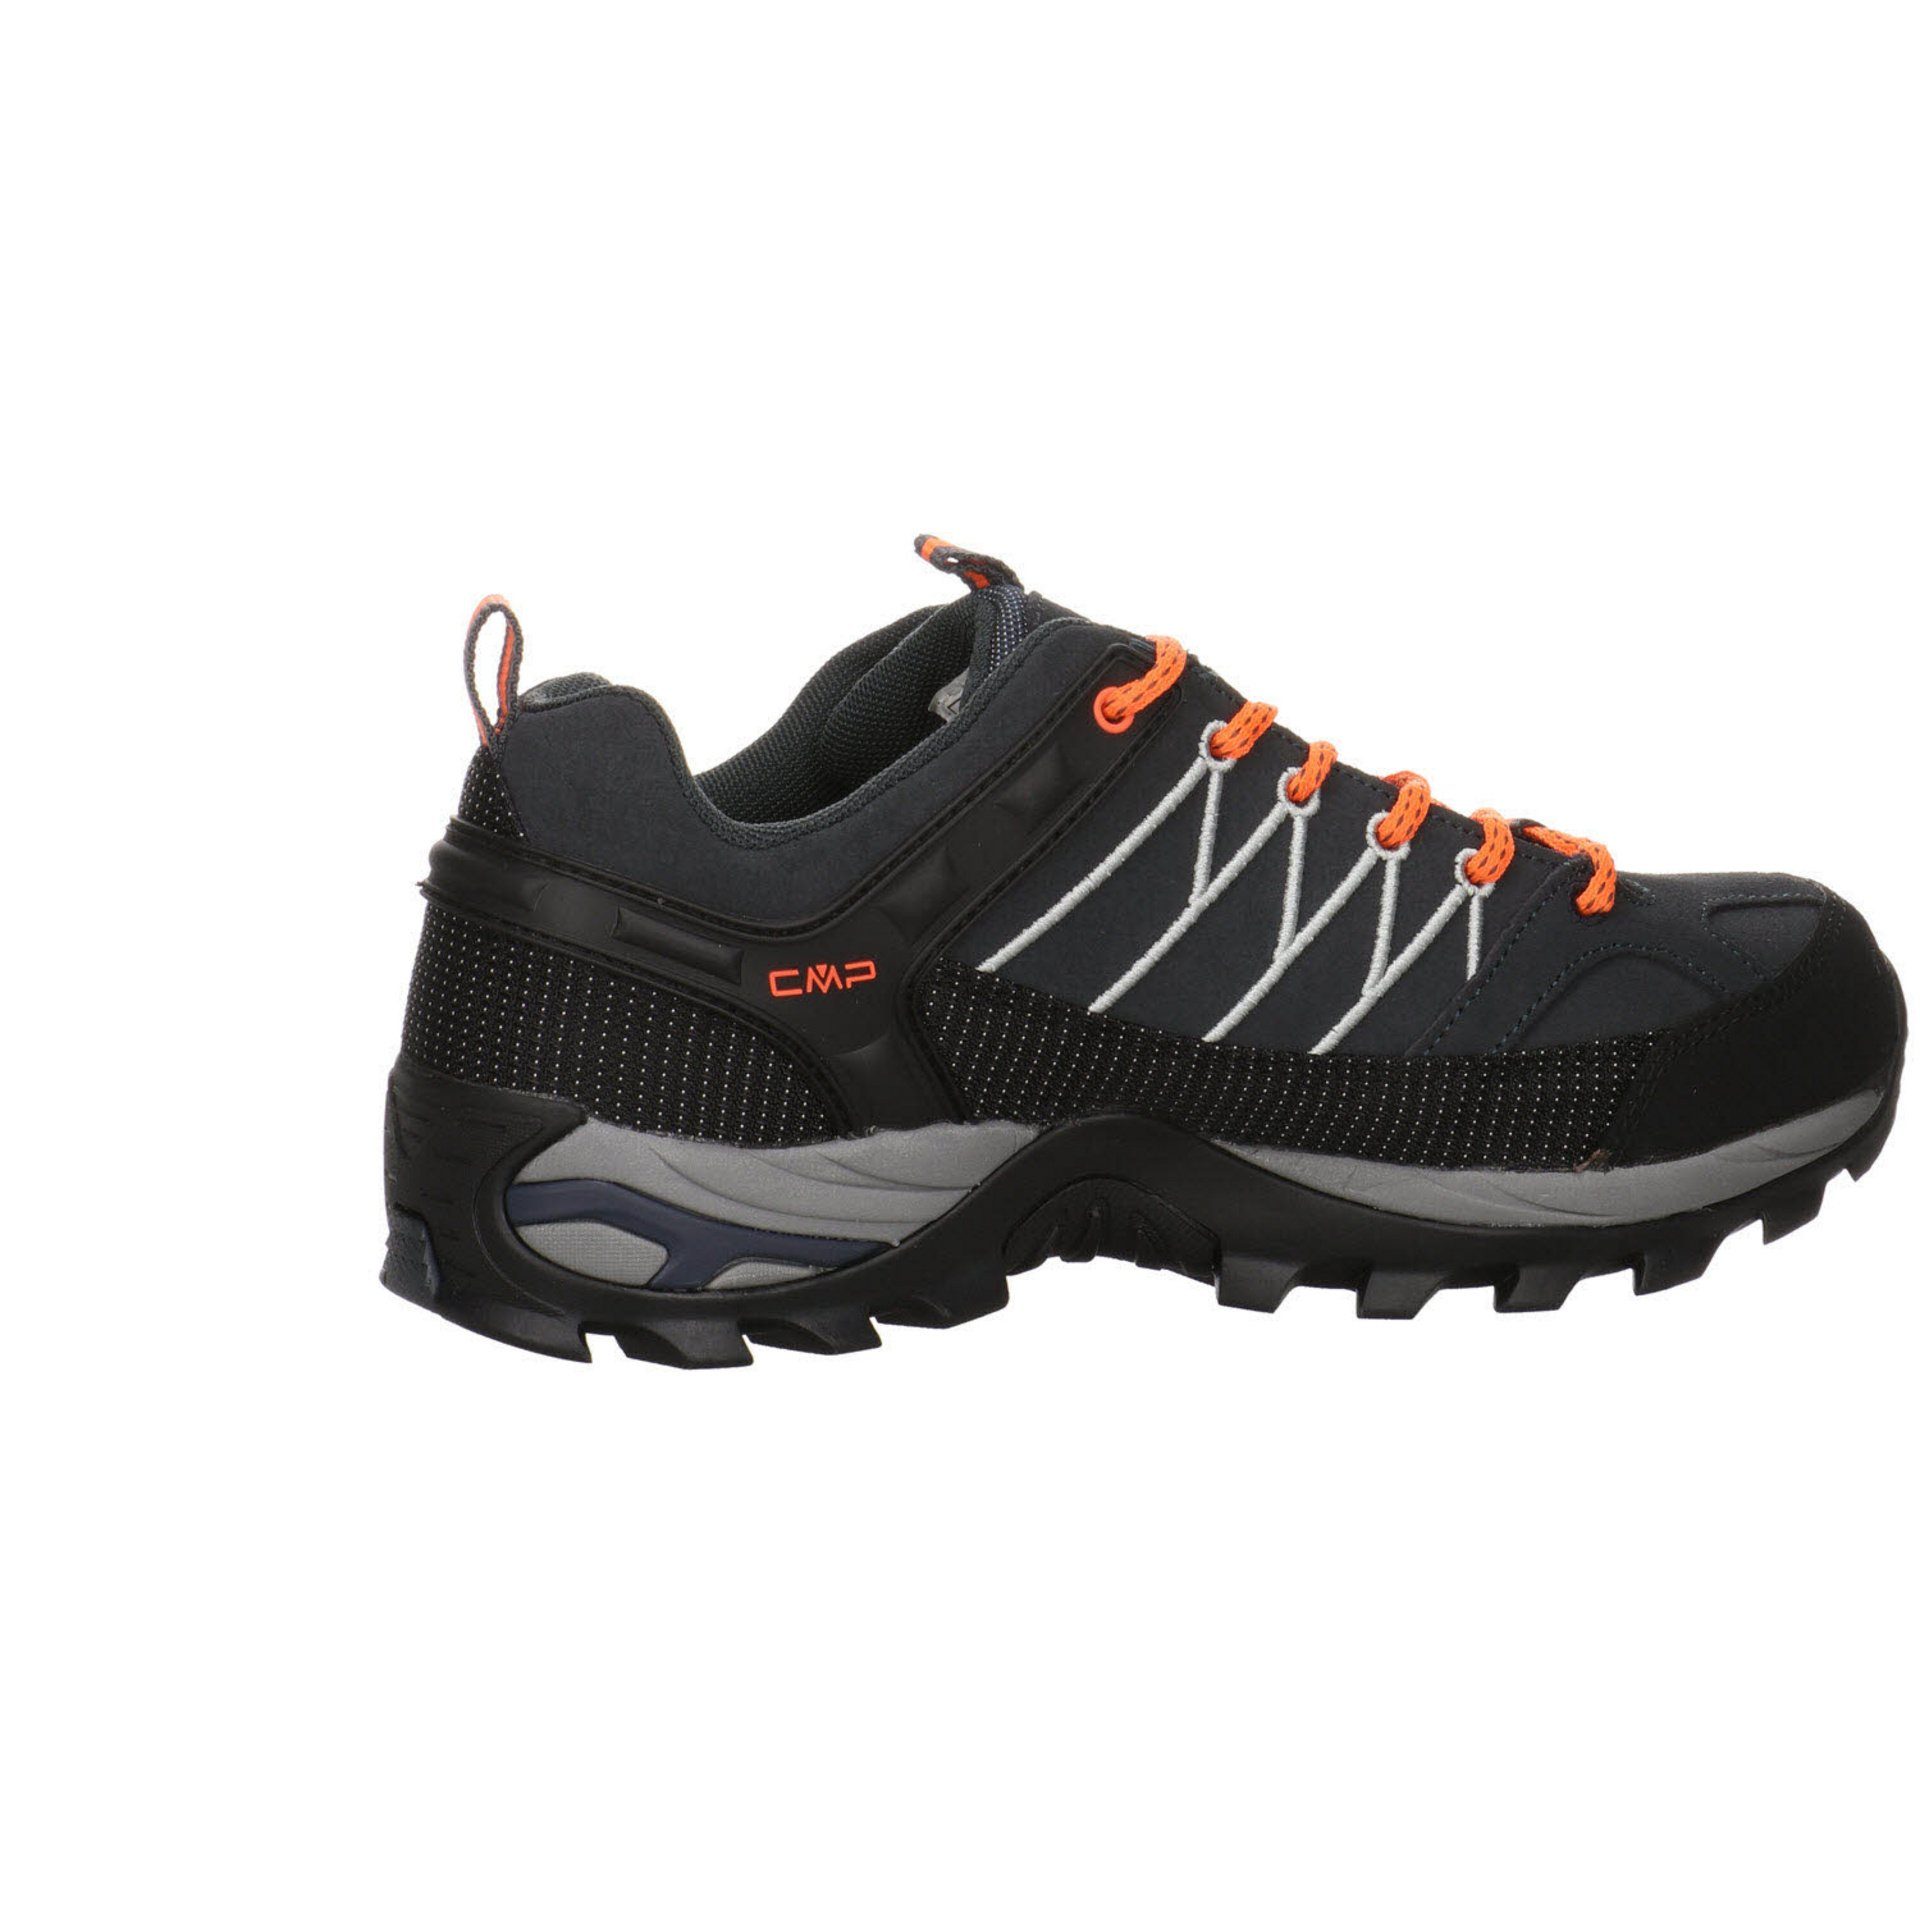 Low Outdoorschuh Schuhe kombi-schwarz grau Synthetikkombination Rigel Outdoor CMP Herren Outdoorschuh